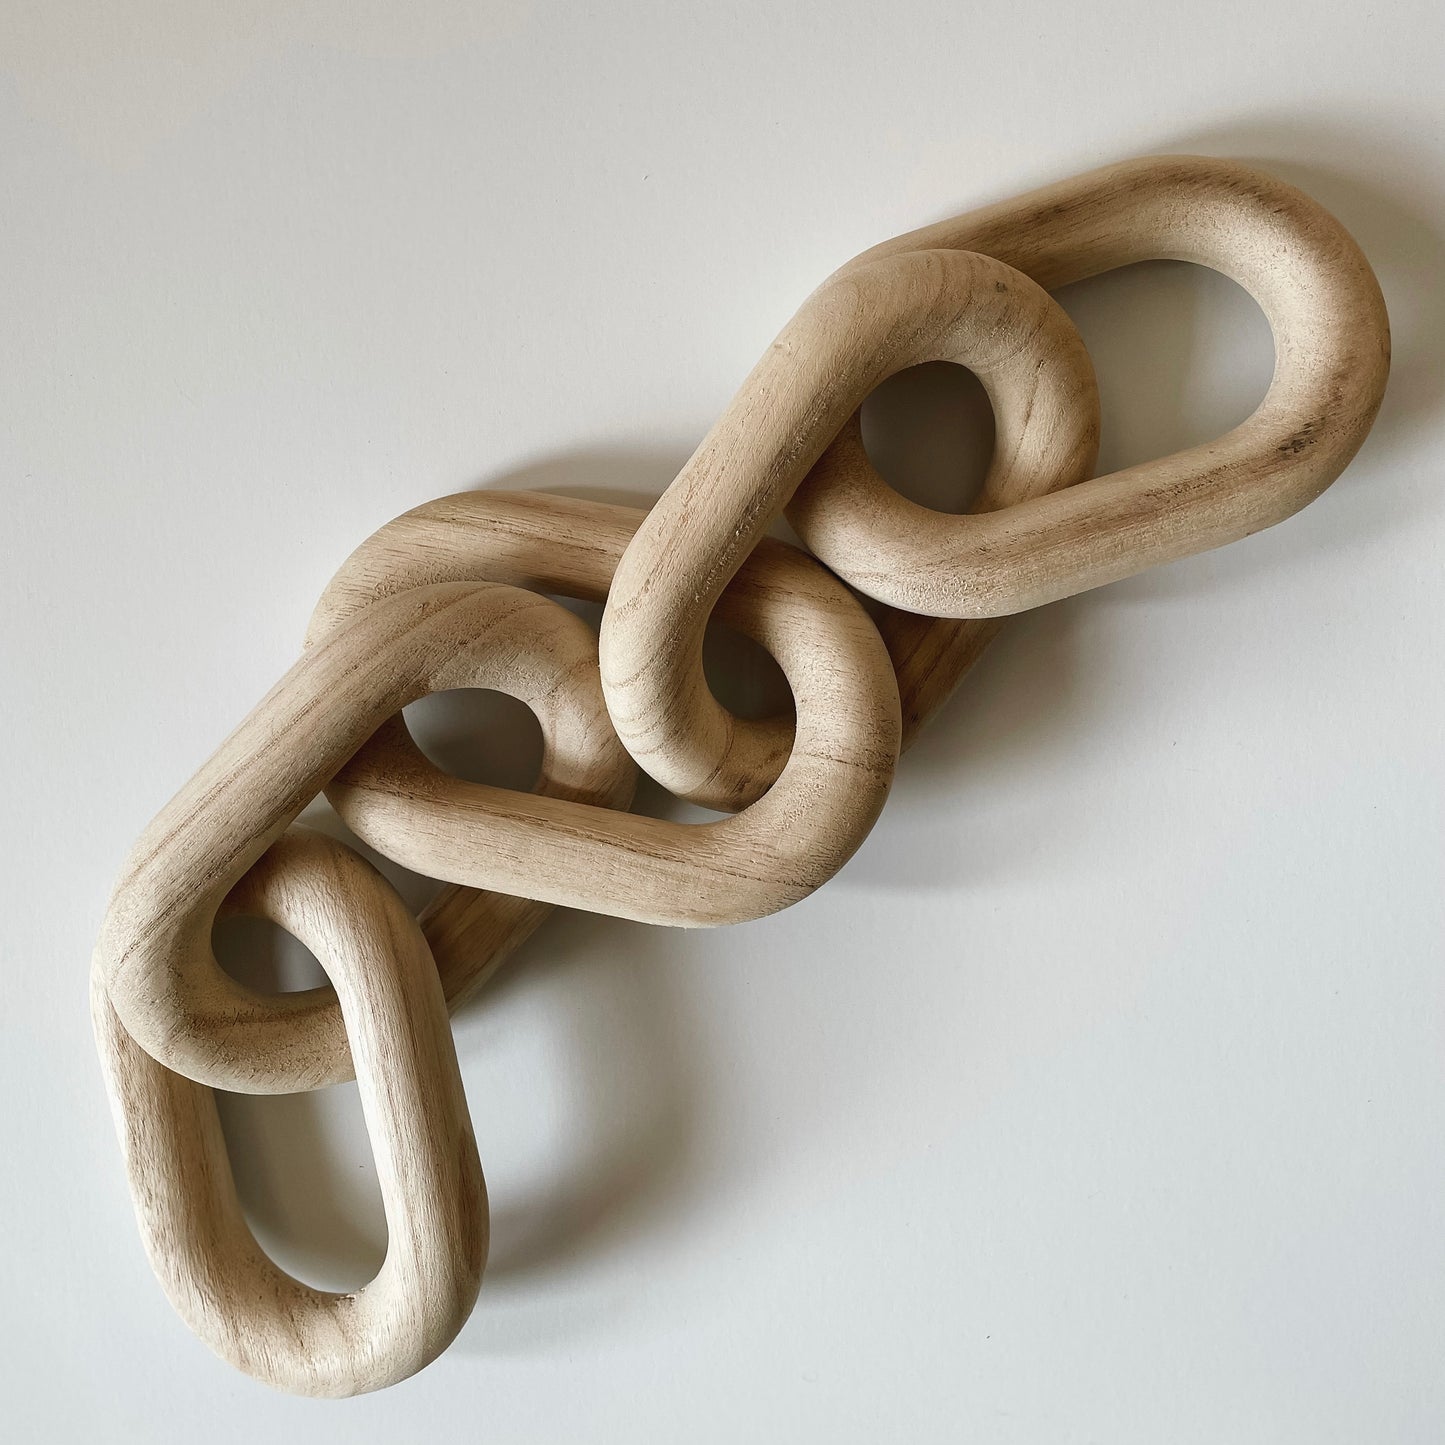 Handmade Wooden Chain Link